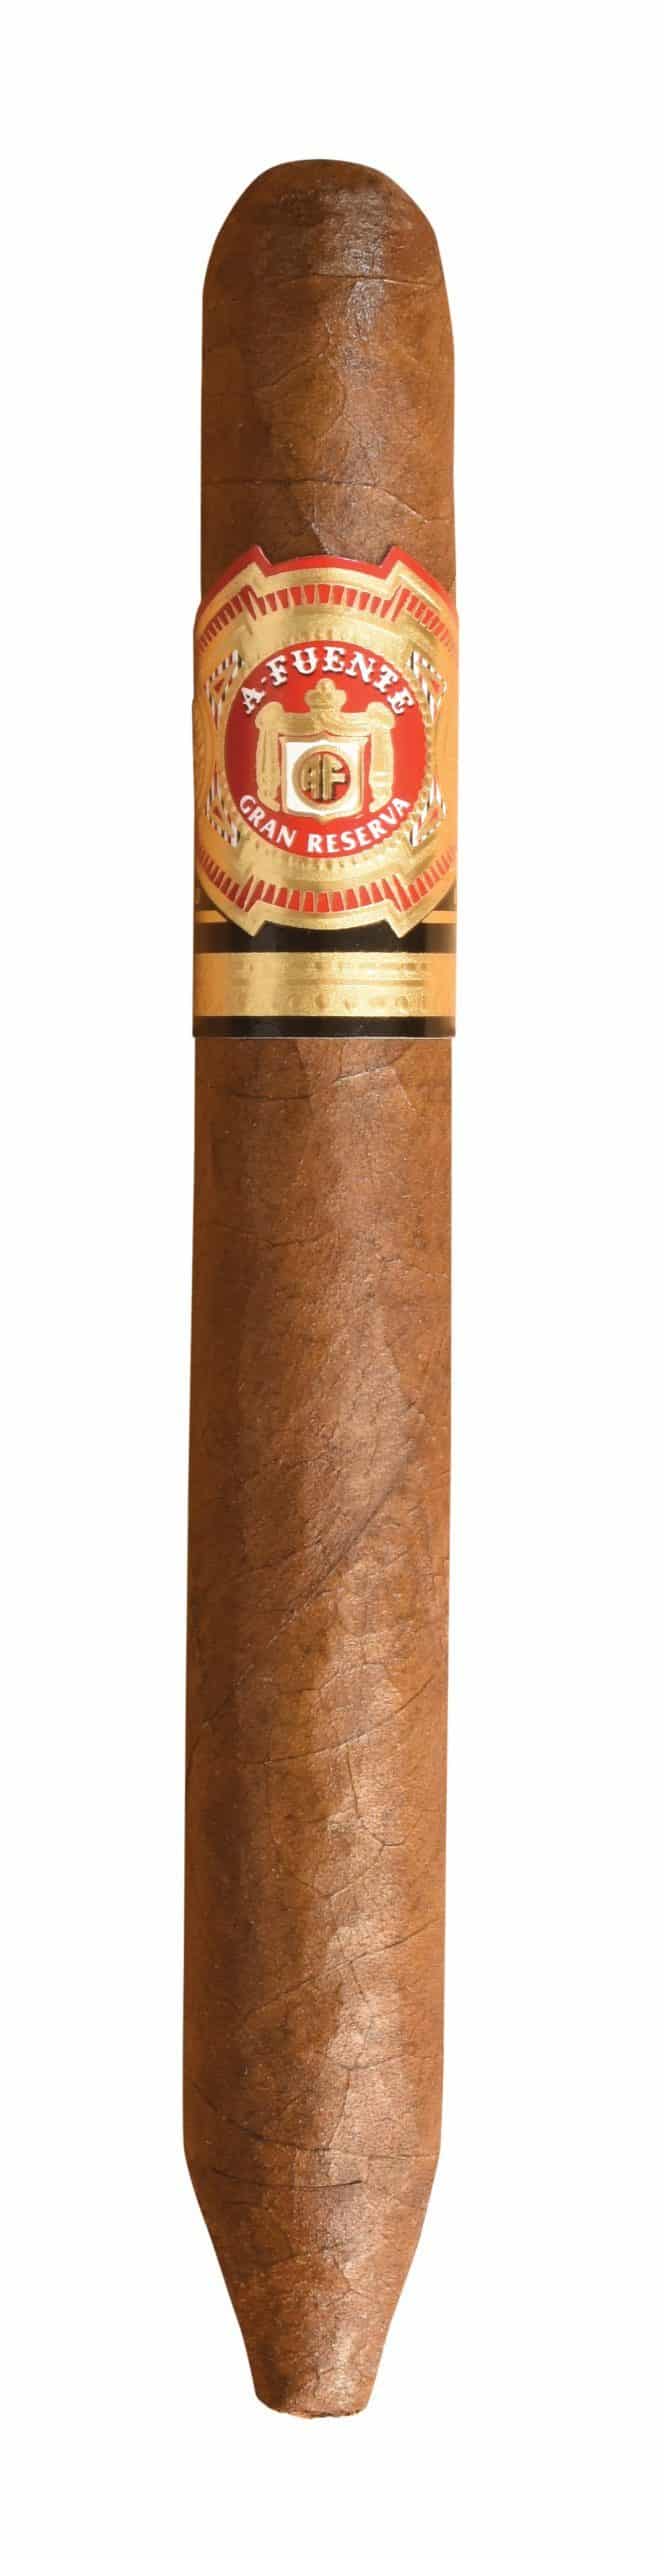 single arturo fuente hemmingway signature cigar